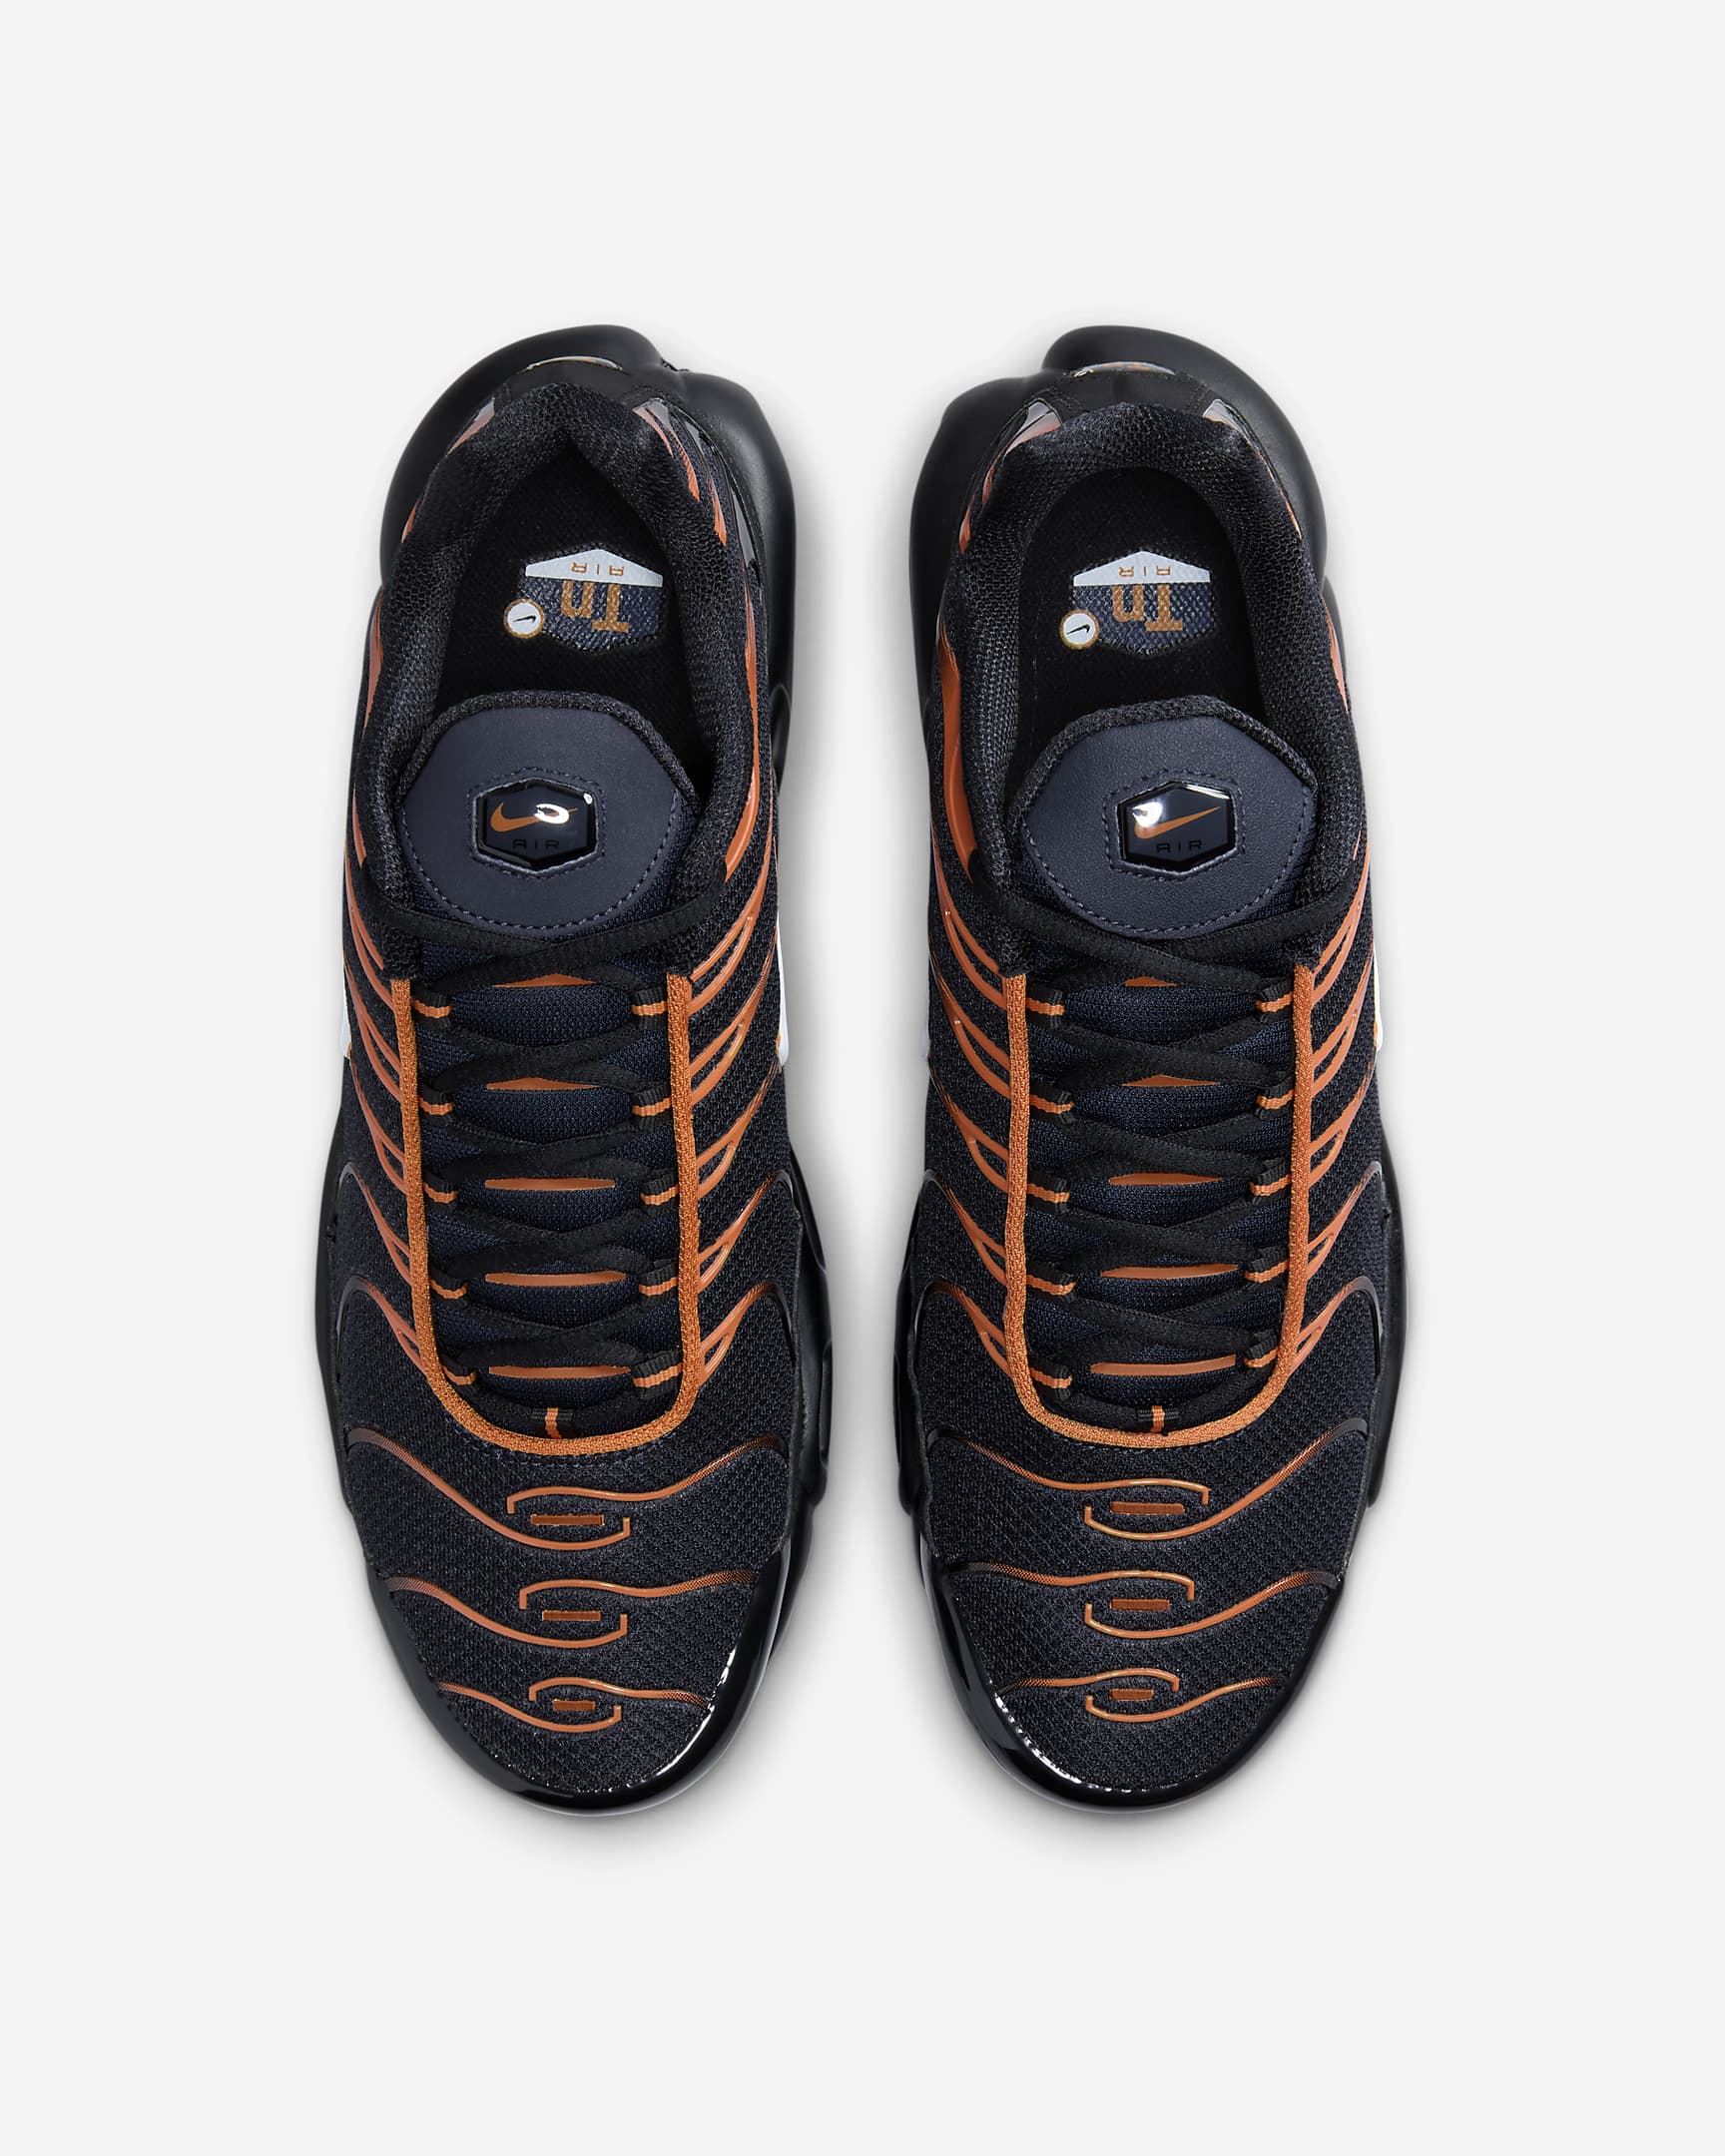 Sapatilhas Nike Air Max Plus para homem - Dark Obsidian/Monarch/Preto/Branco